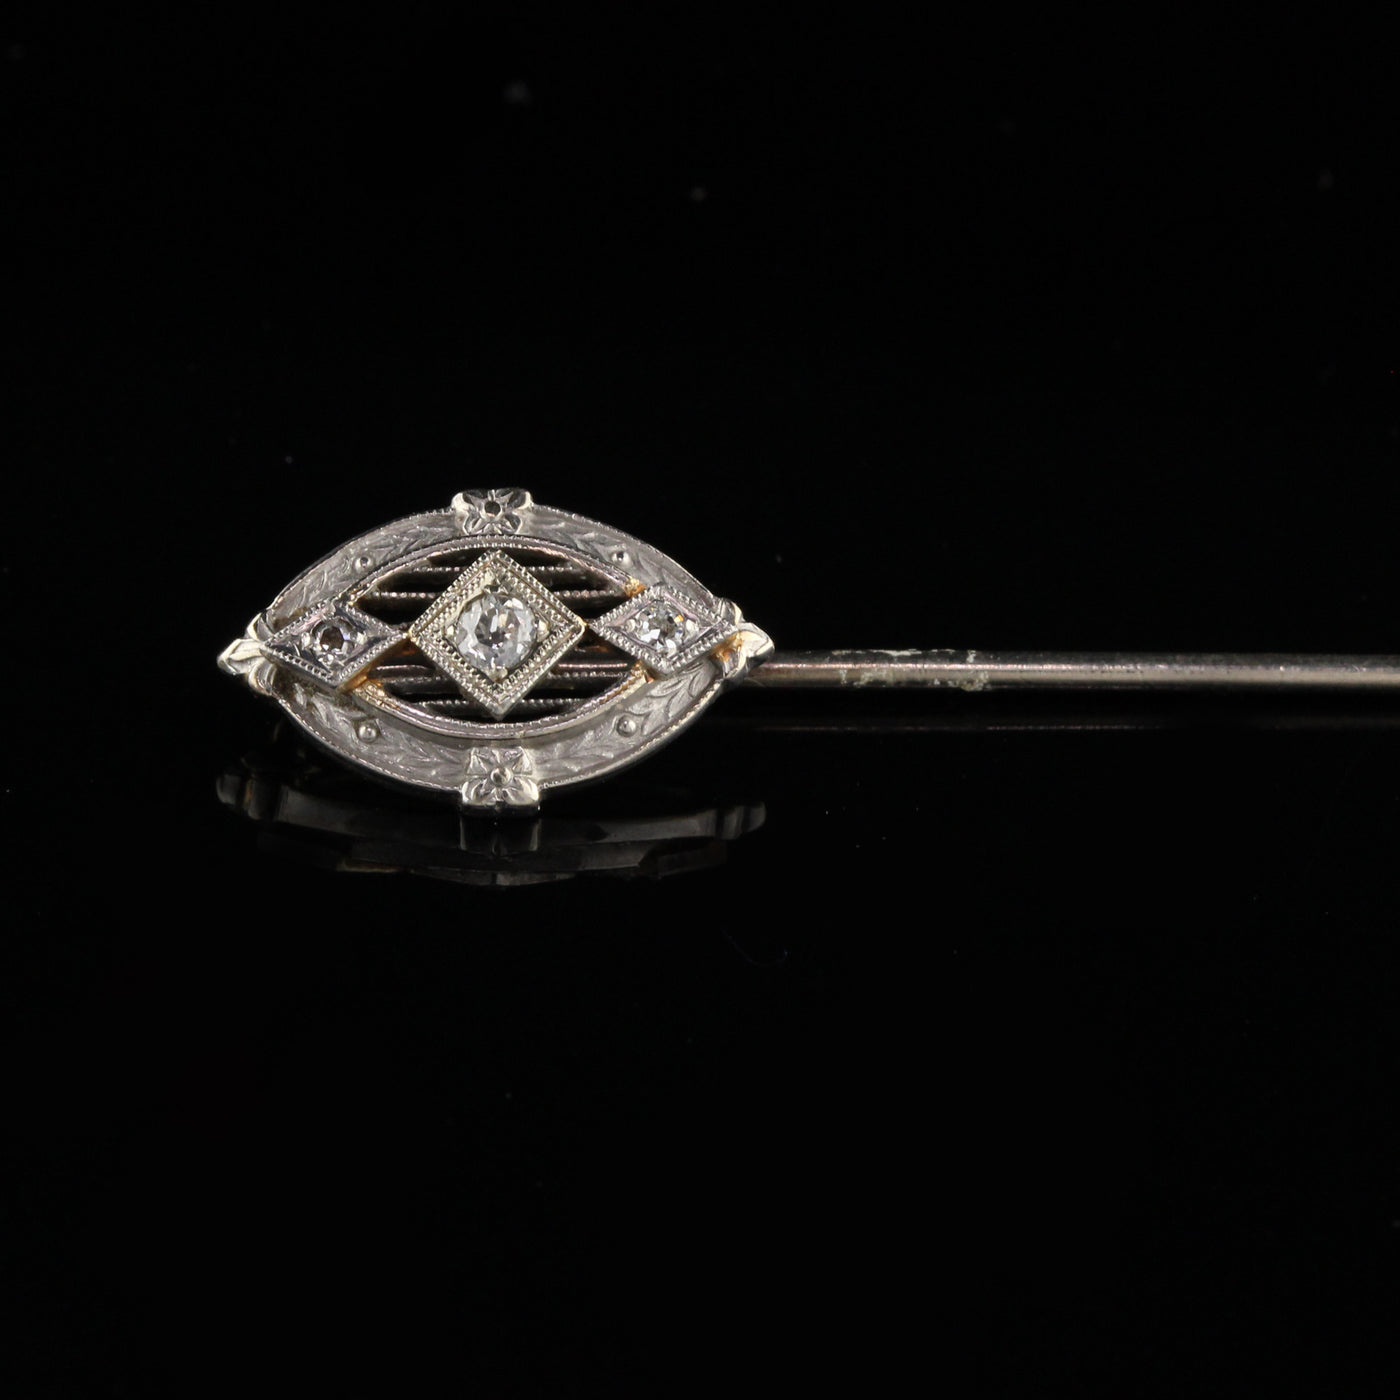 Antique Art Deco 14K White Gold Diamond Stick Pin